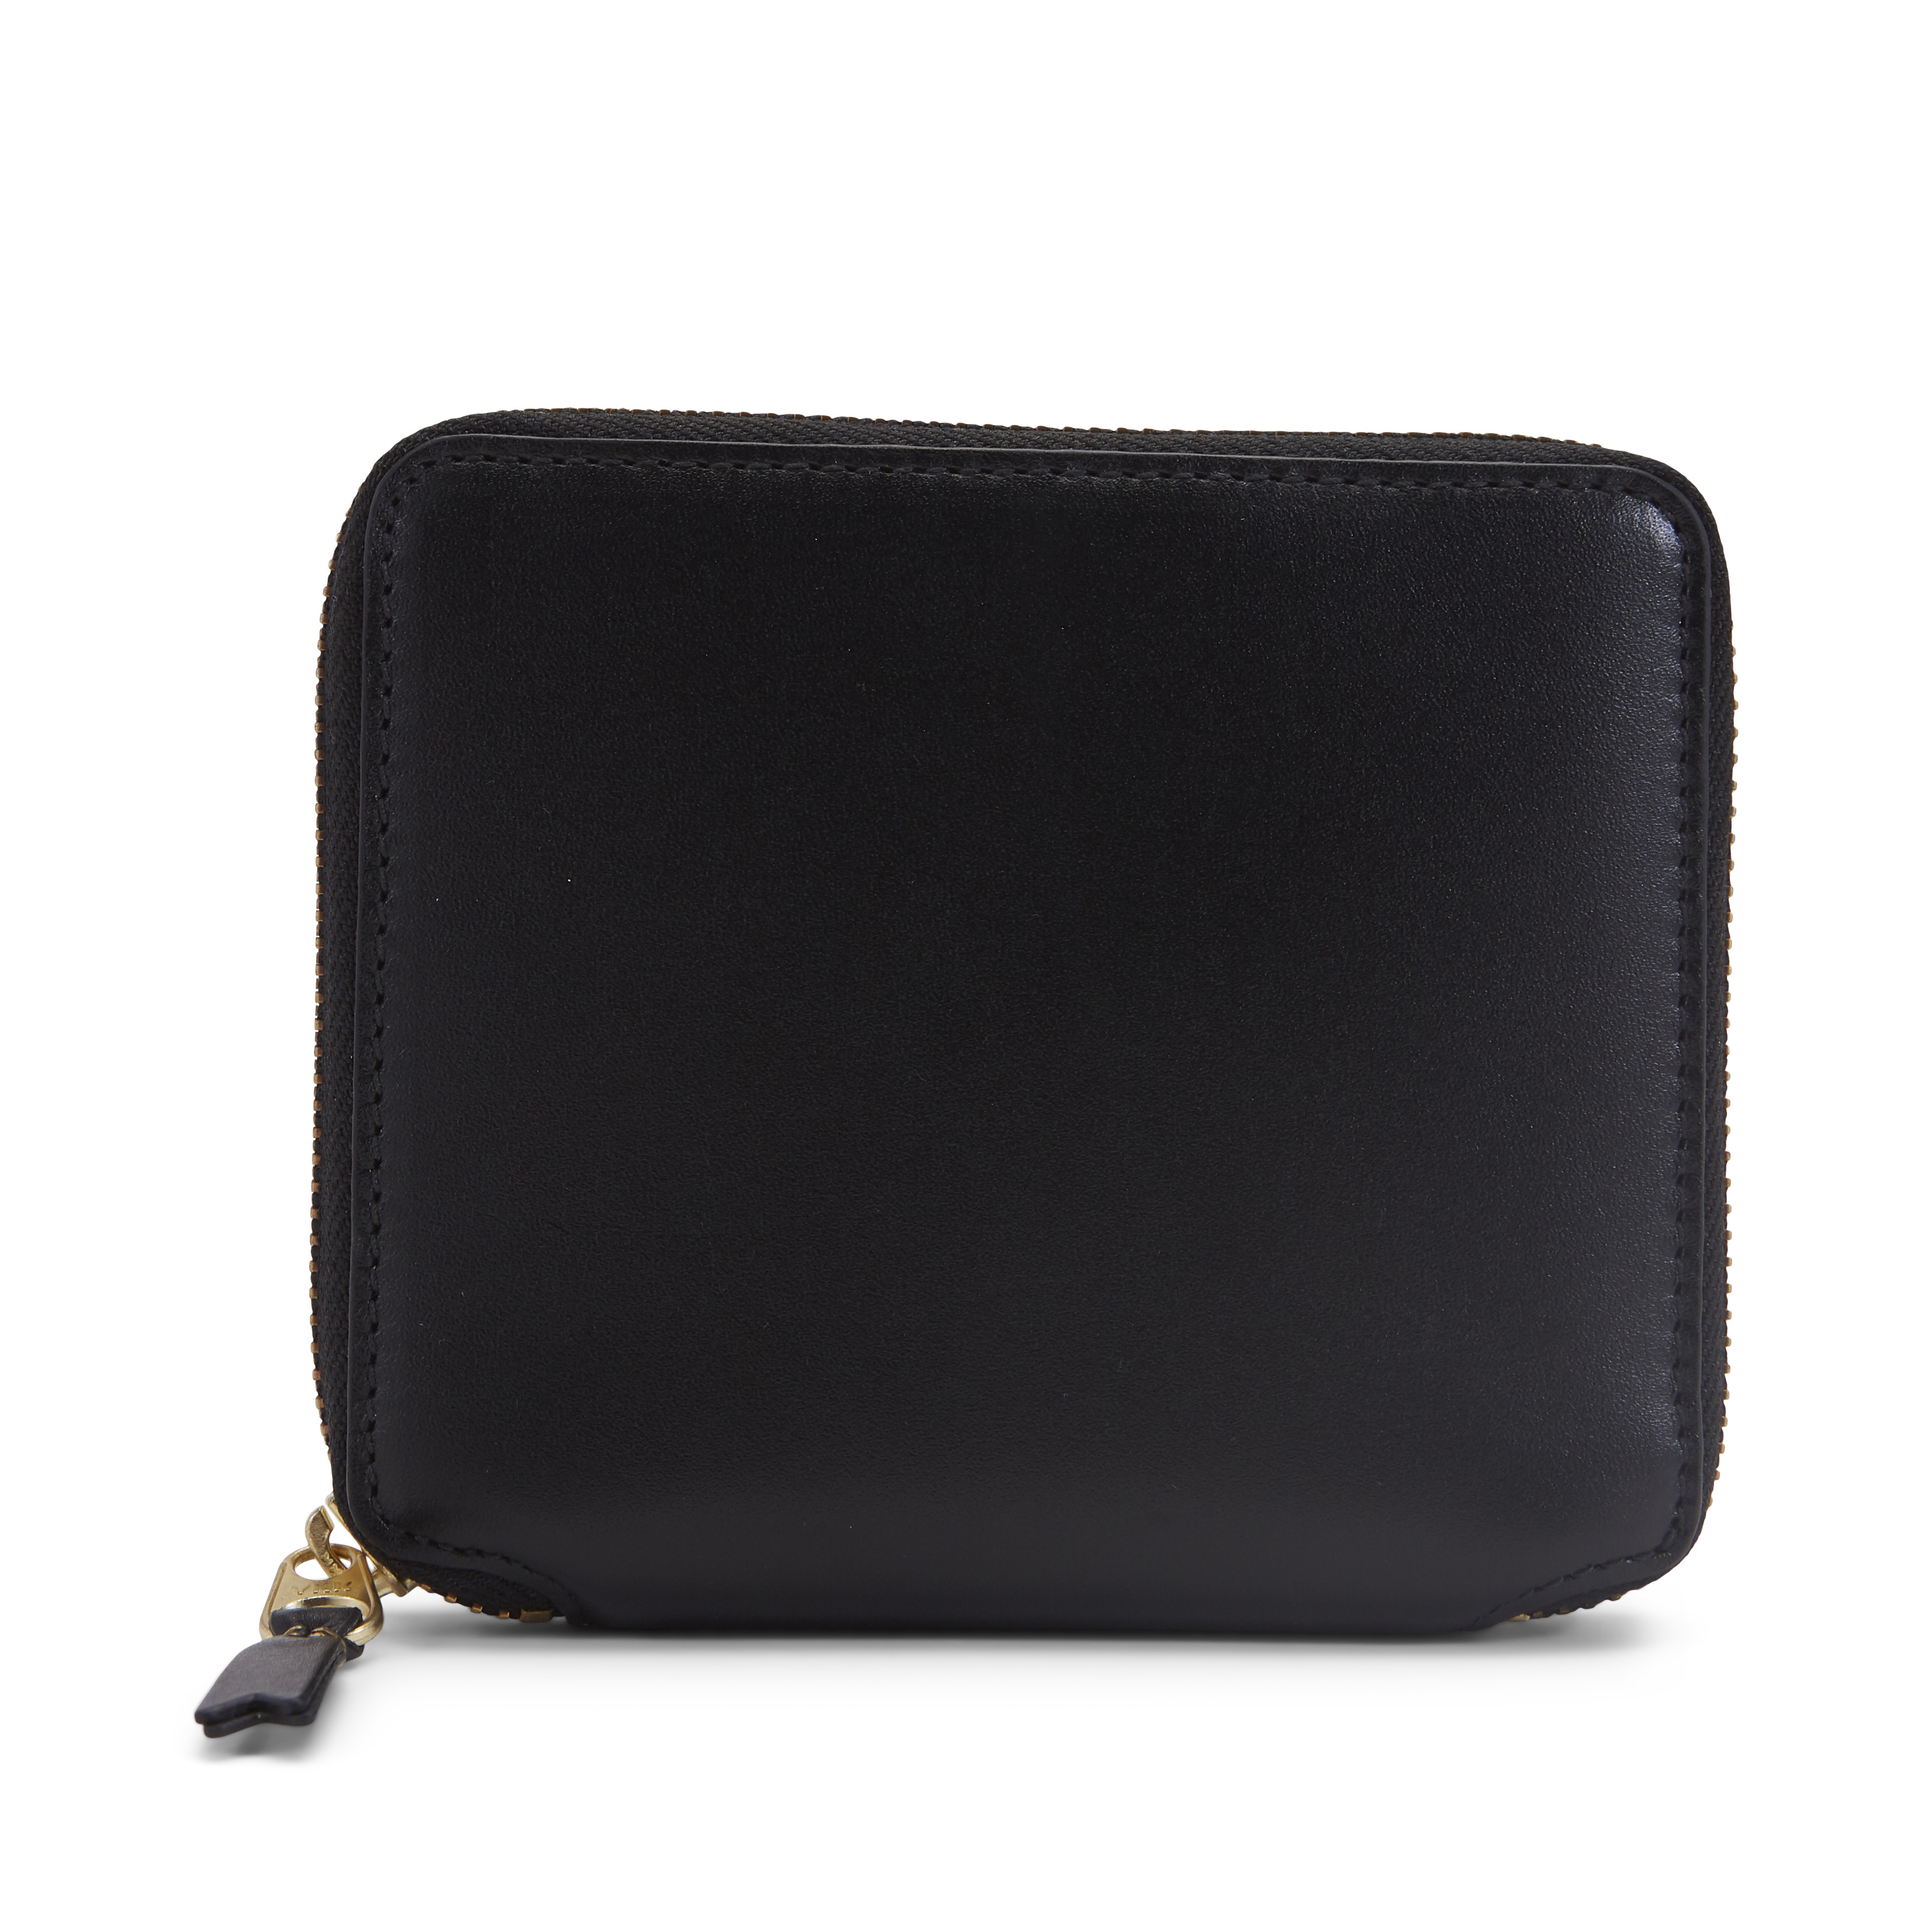 Comme des Garcons SA2100 Classic Plain Wallet Black in Leather